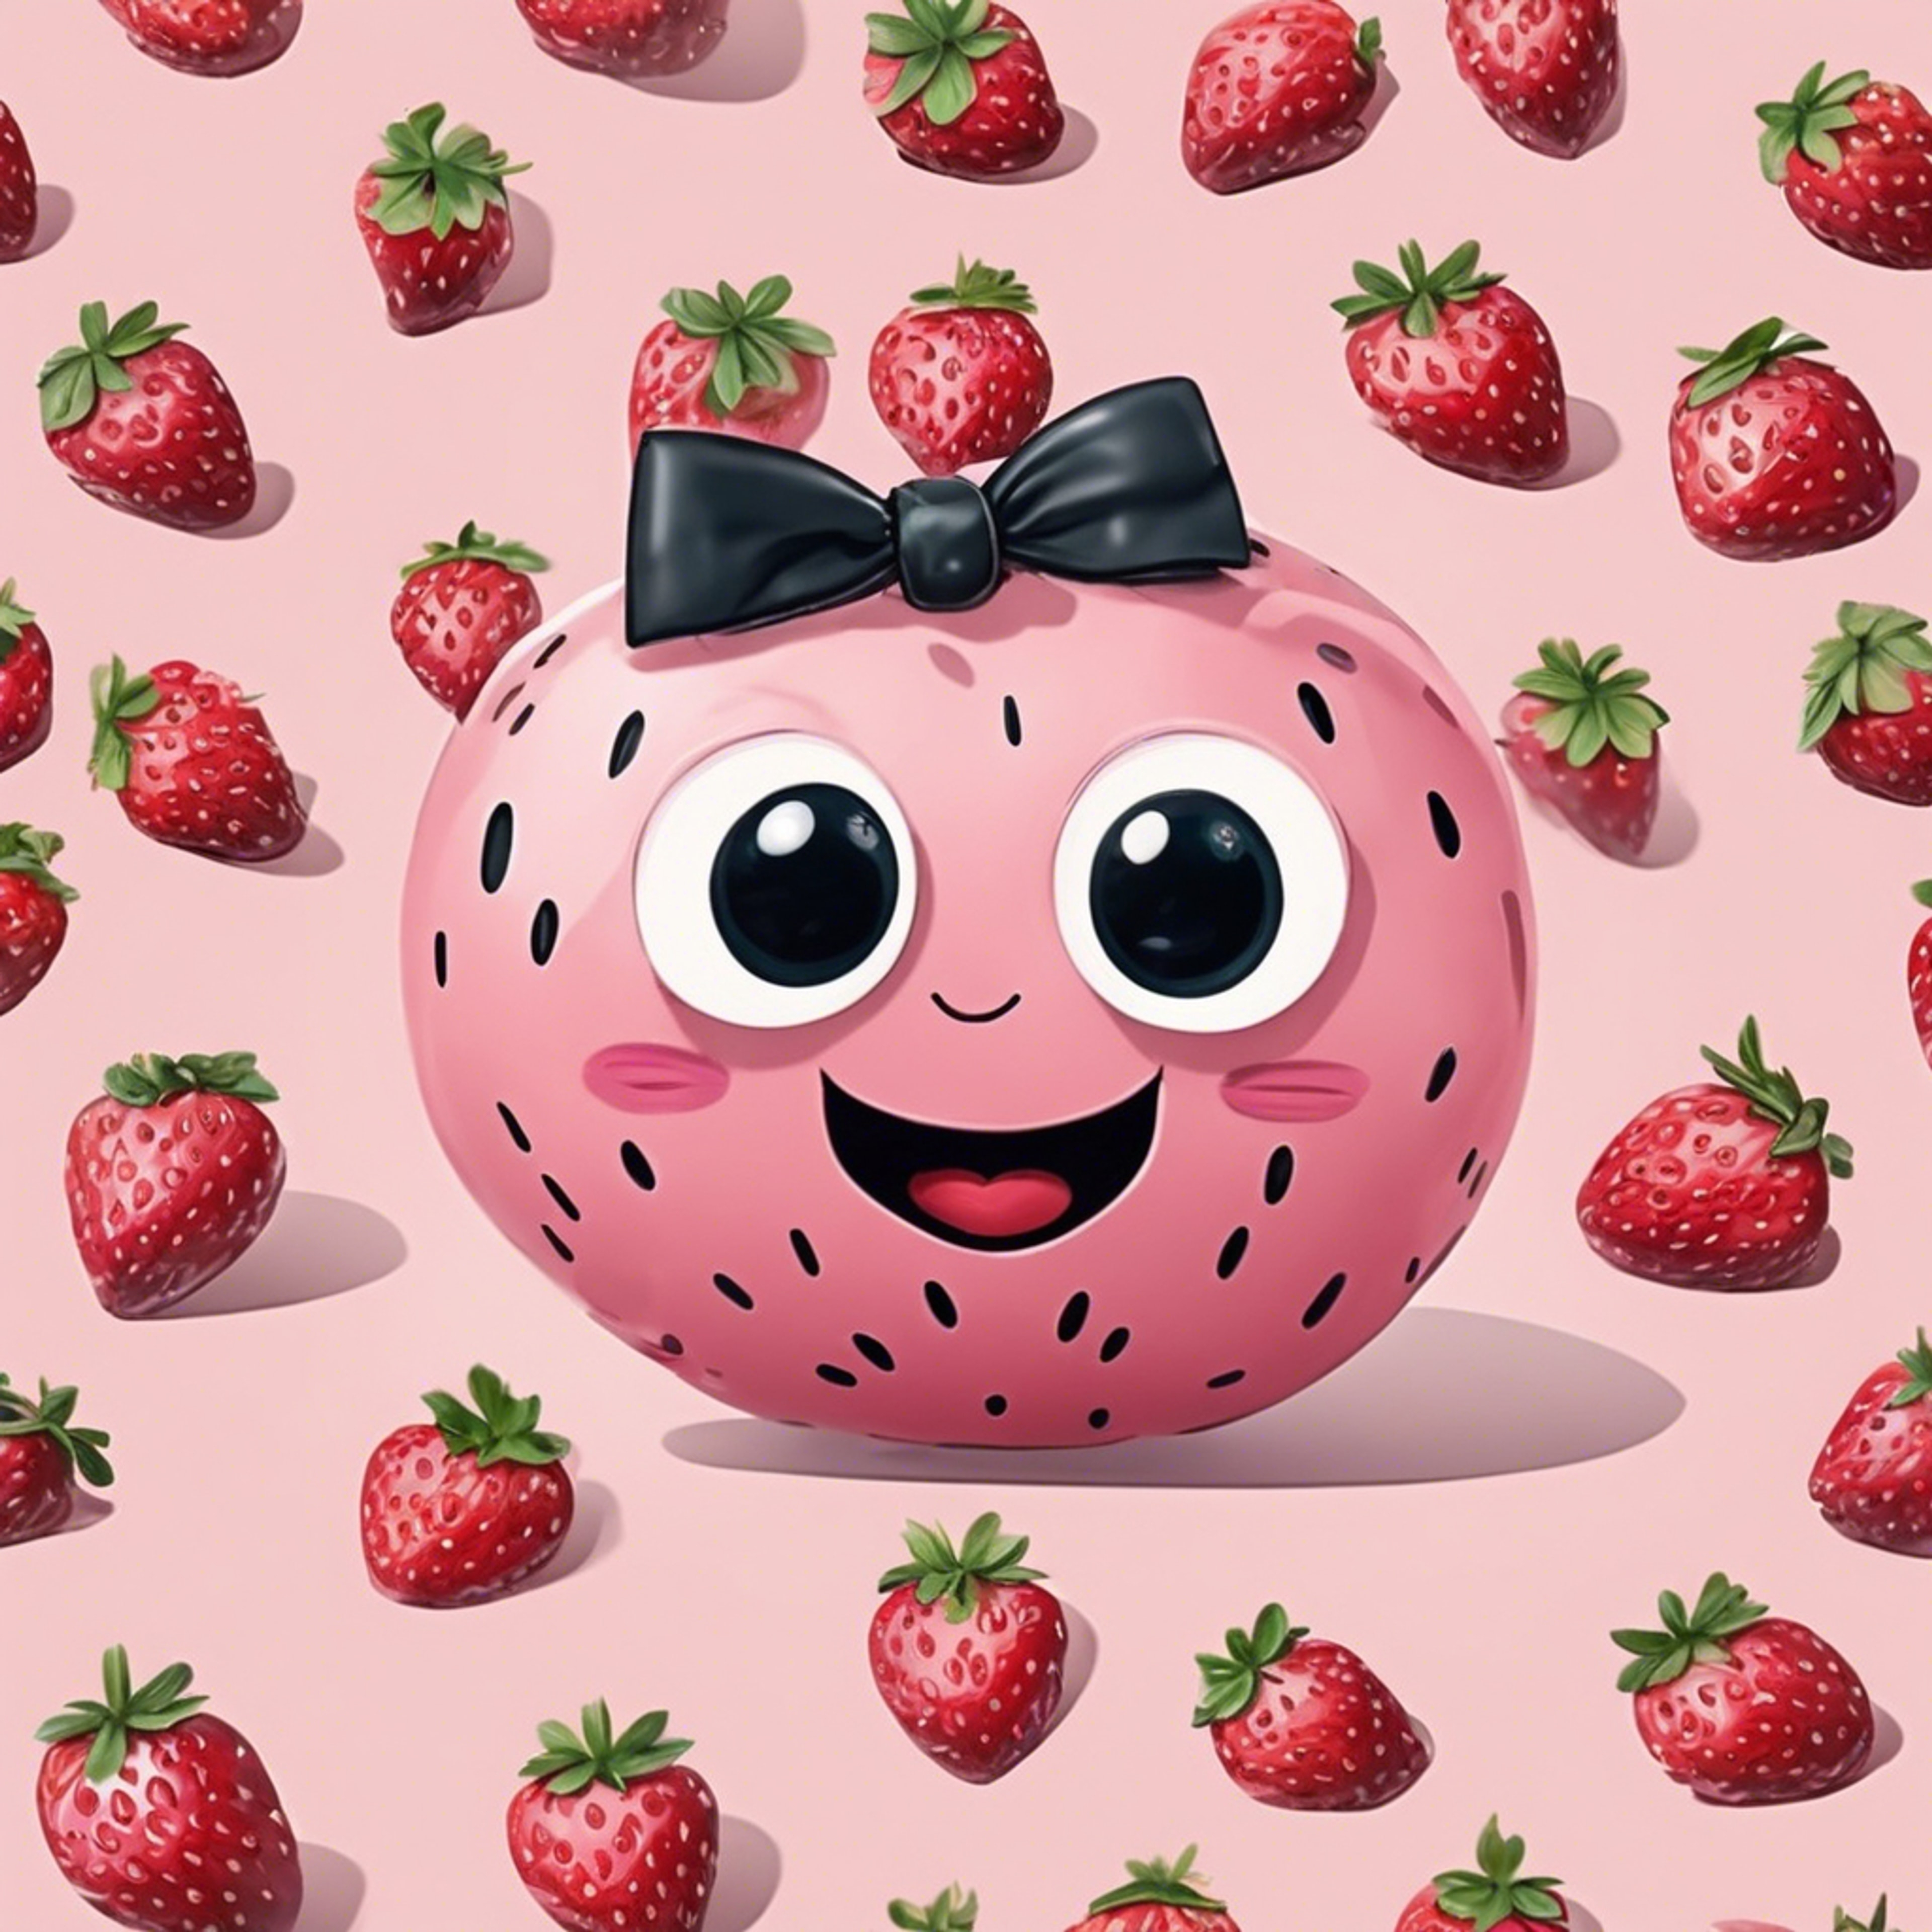 Cute, smiling light pink kawaii strawberries with big eyes and little bow ties. ផ្ទាំង​រូបភាព[24a5e2efca874b08b7f4]